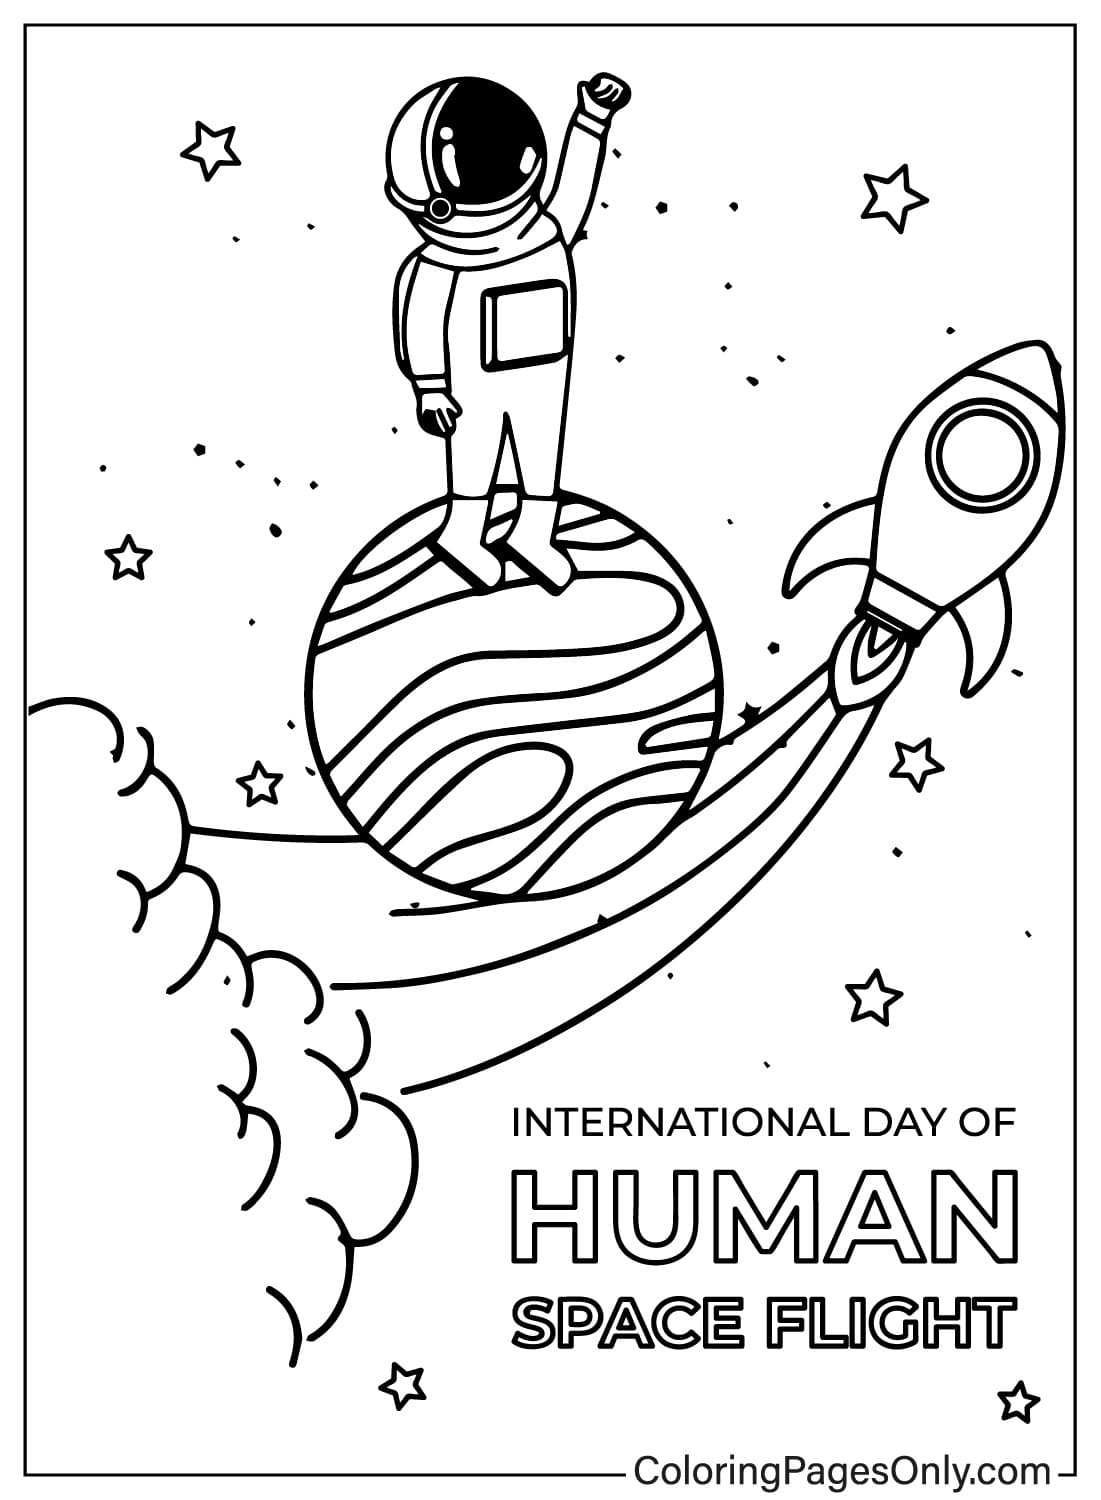 International Day of Human Space Flight Coloring Sheet for Kids from International Day of Human Space Flight